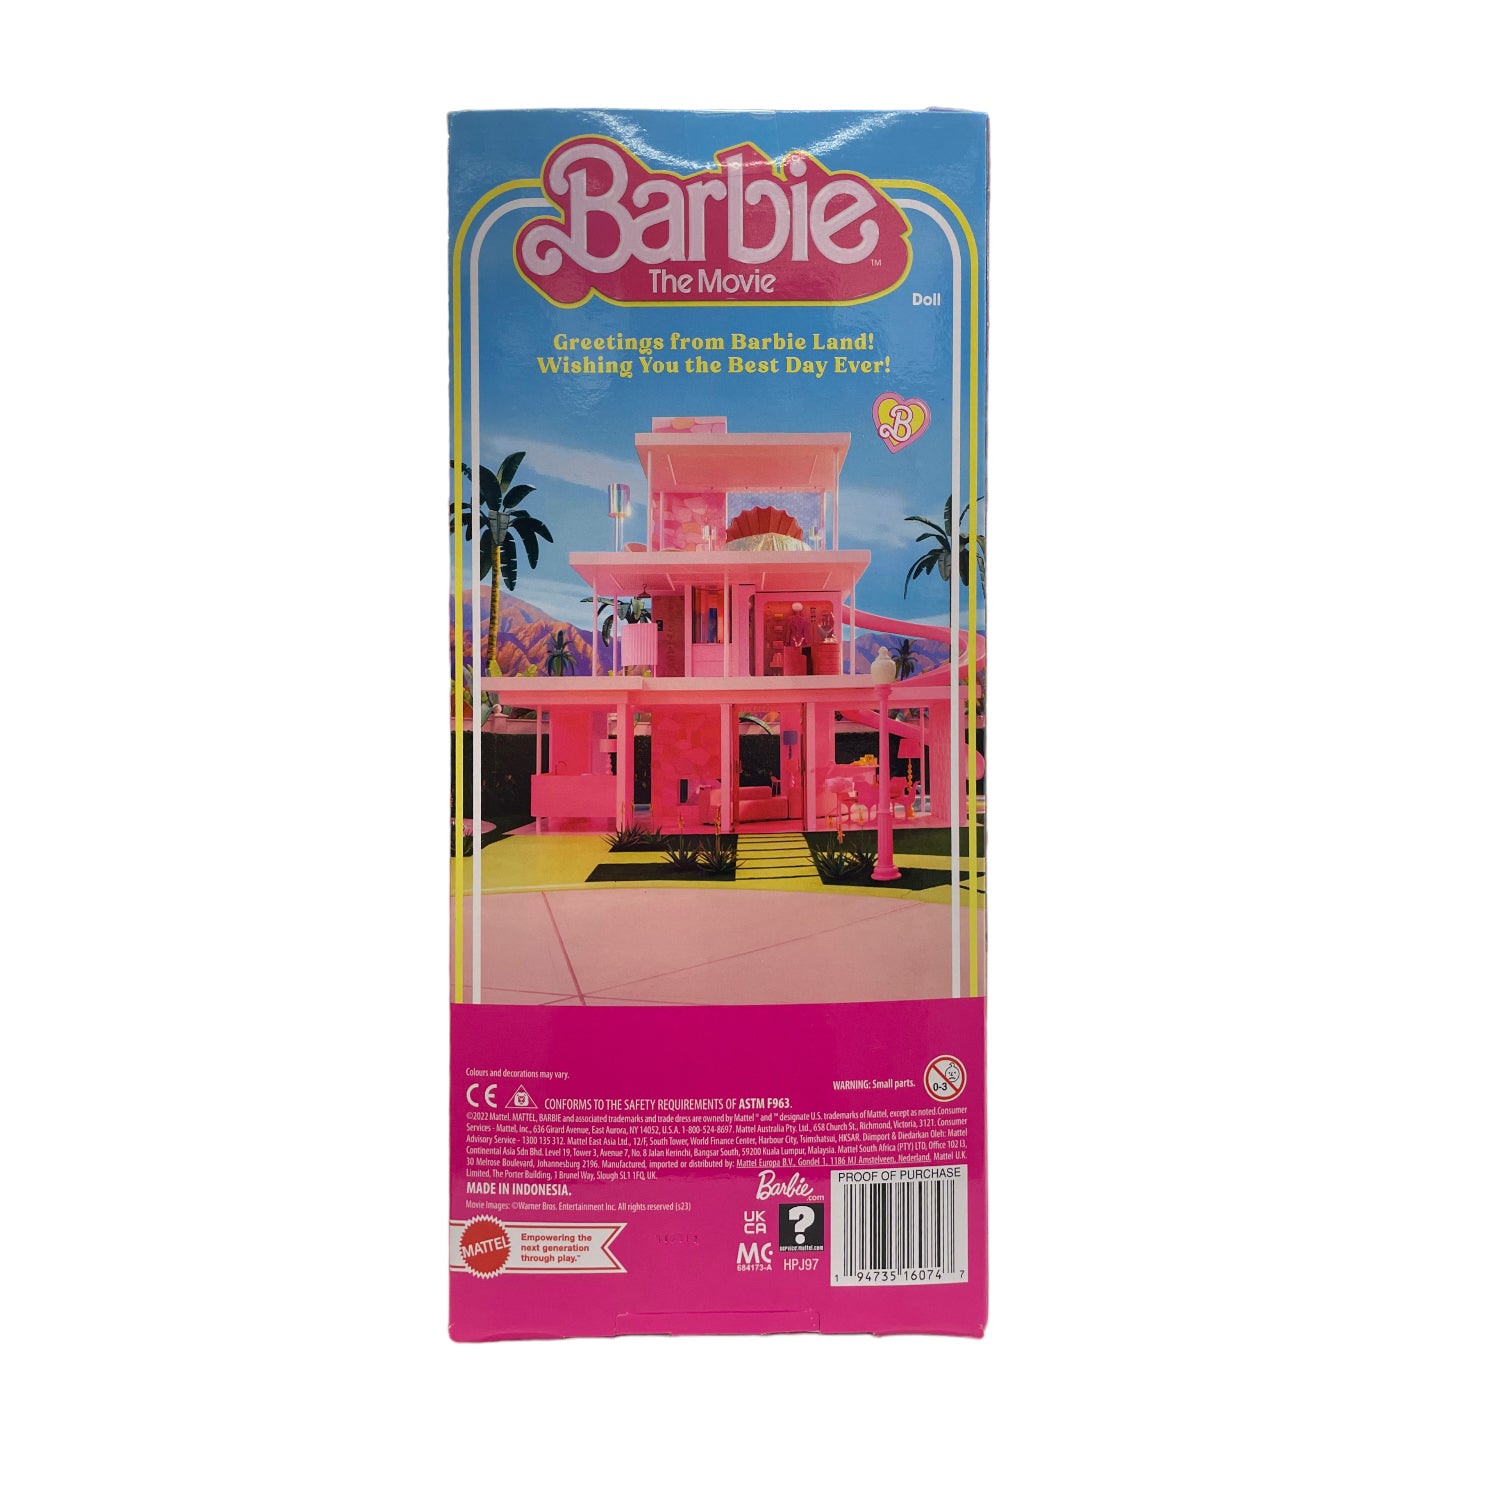 Barbie The Movie Ken Doll, Beach Striped Pastel